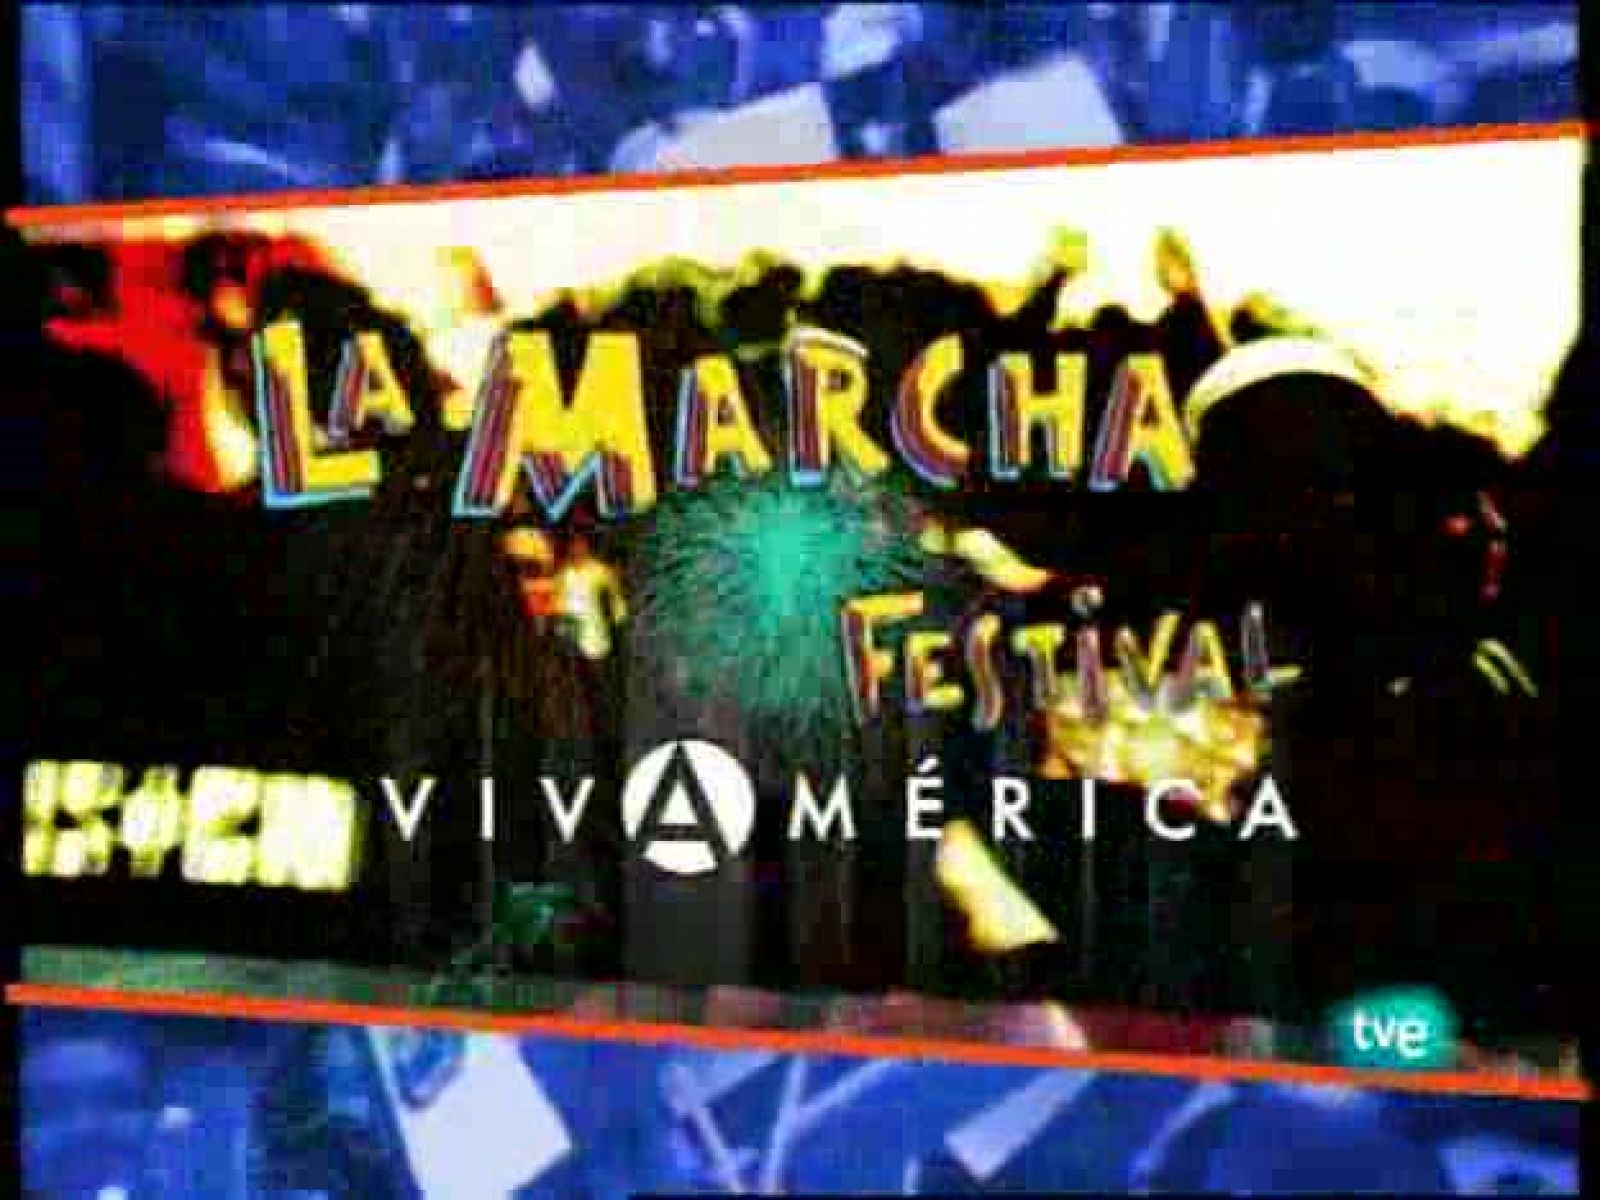 Viva América - La marcha Vivamérica